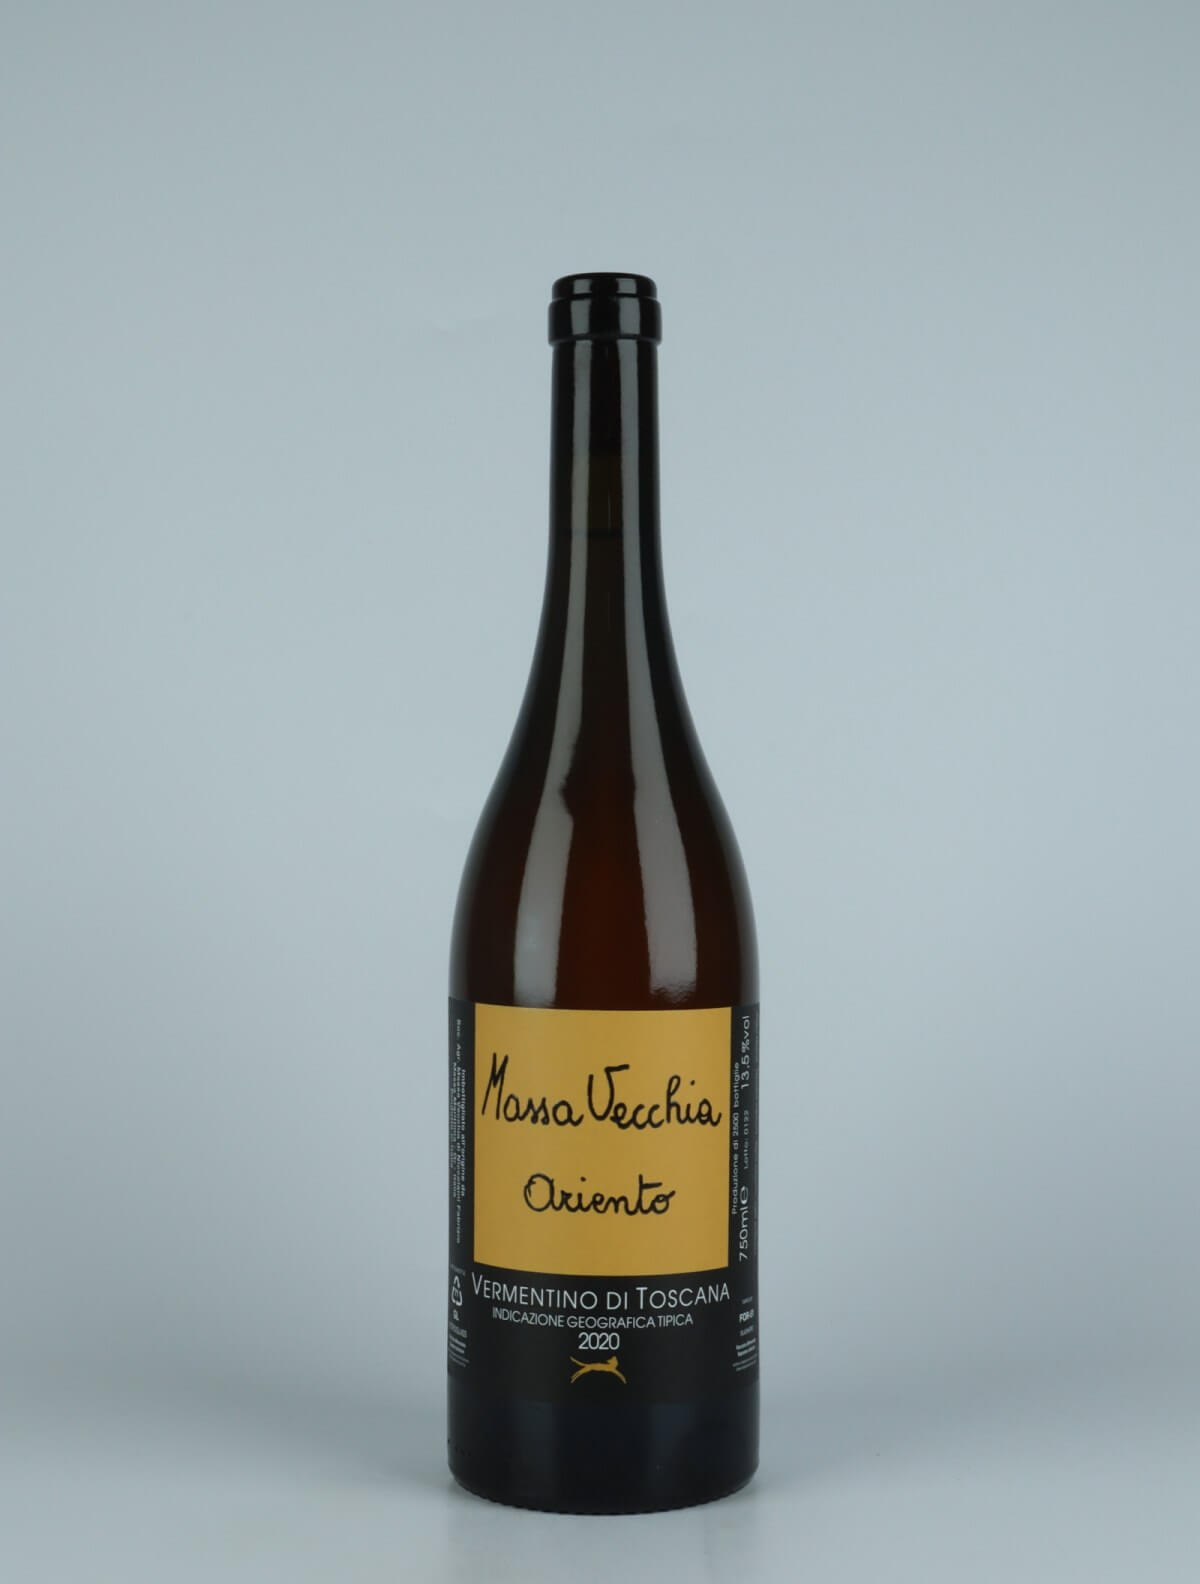 A bottle 2020 Ariento White wine from Massa Vecchia, Tuscany in Italy